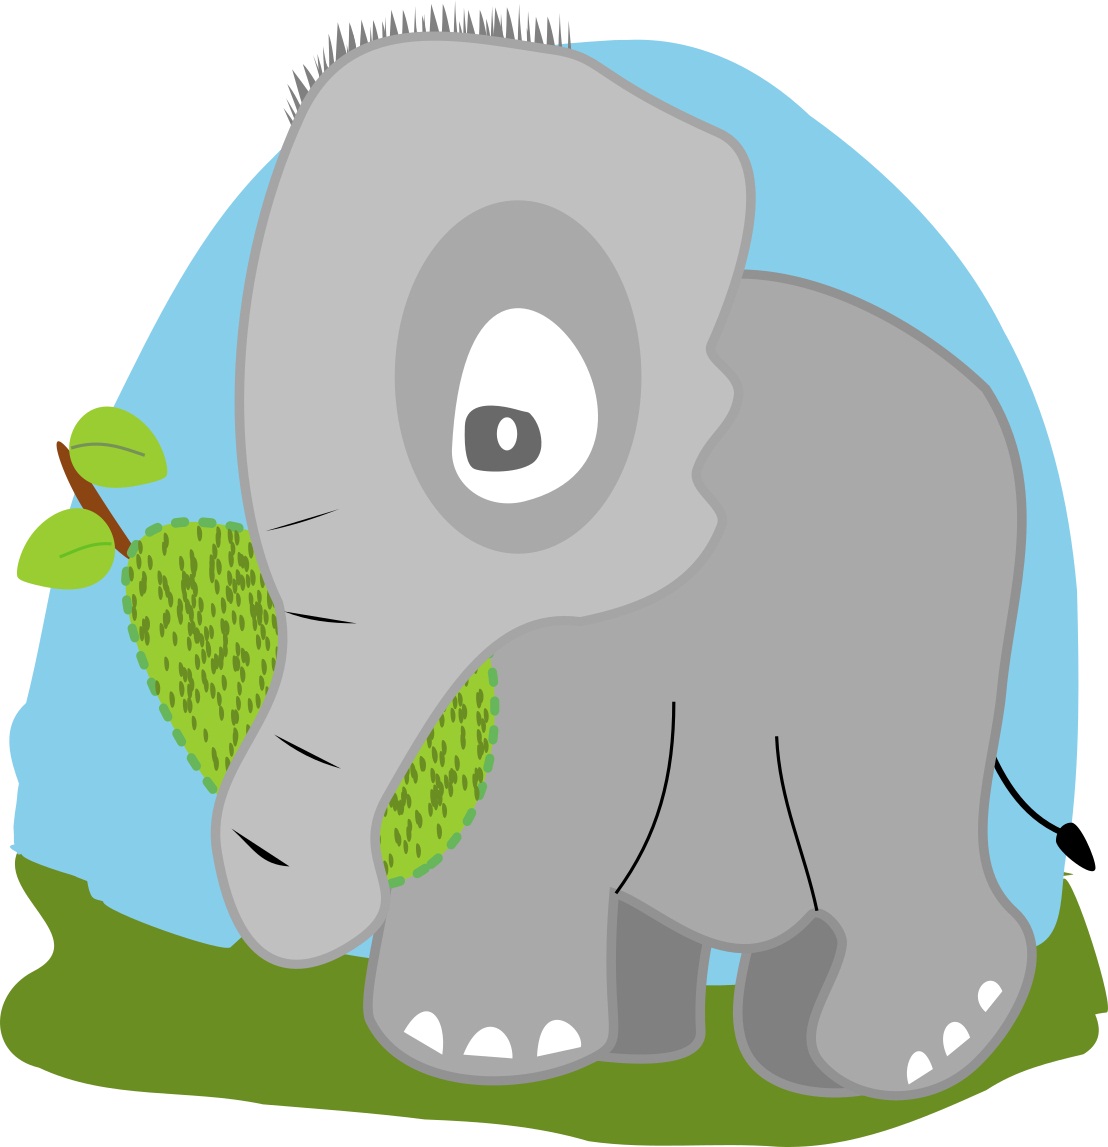 elephant with jackfruit holding his trunk